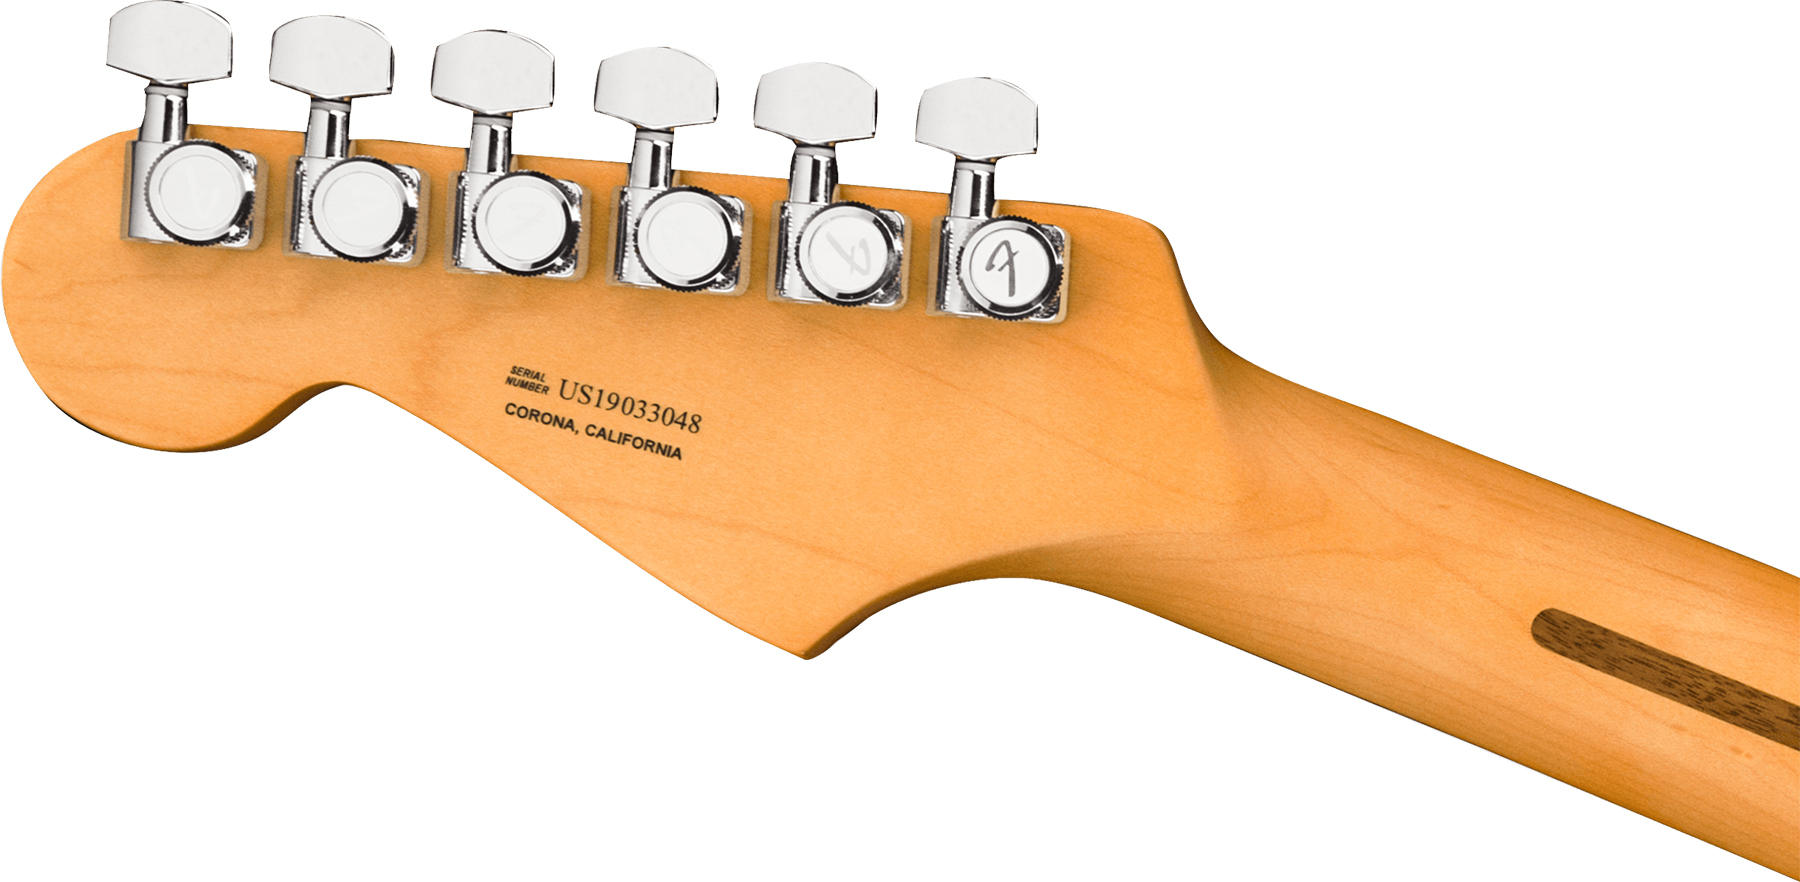 Fender Strat American Ultra Hss 2019 Usa Mn - Ultraburst - Str shape electric guitar - Variation 3